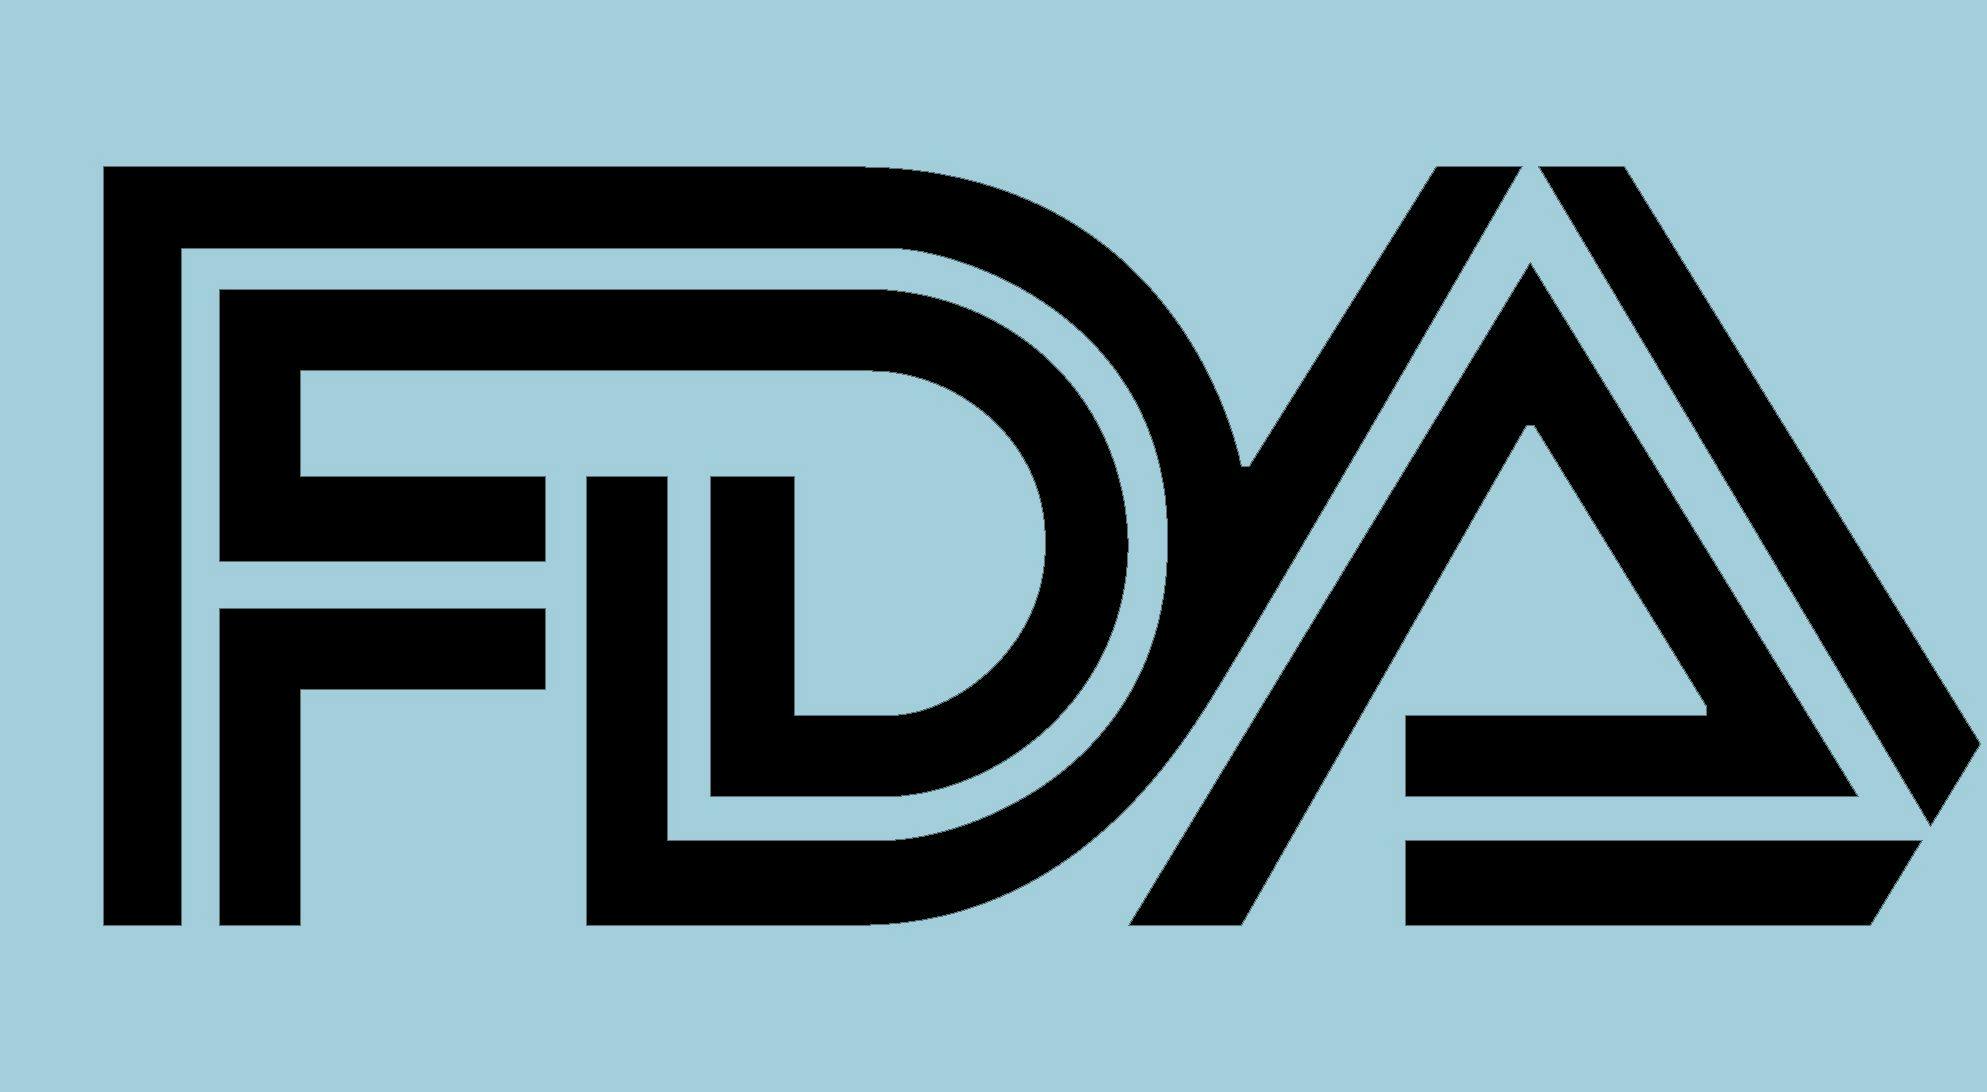 Image of the FDA's logo on a light blue background.